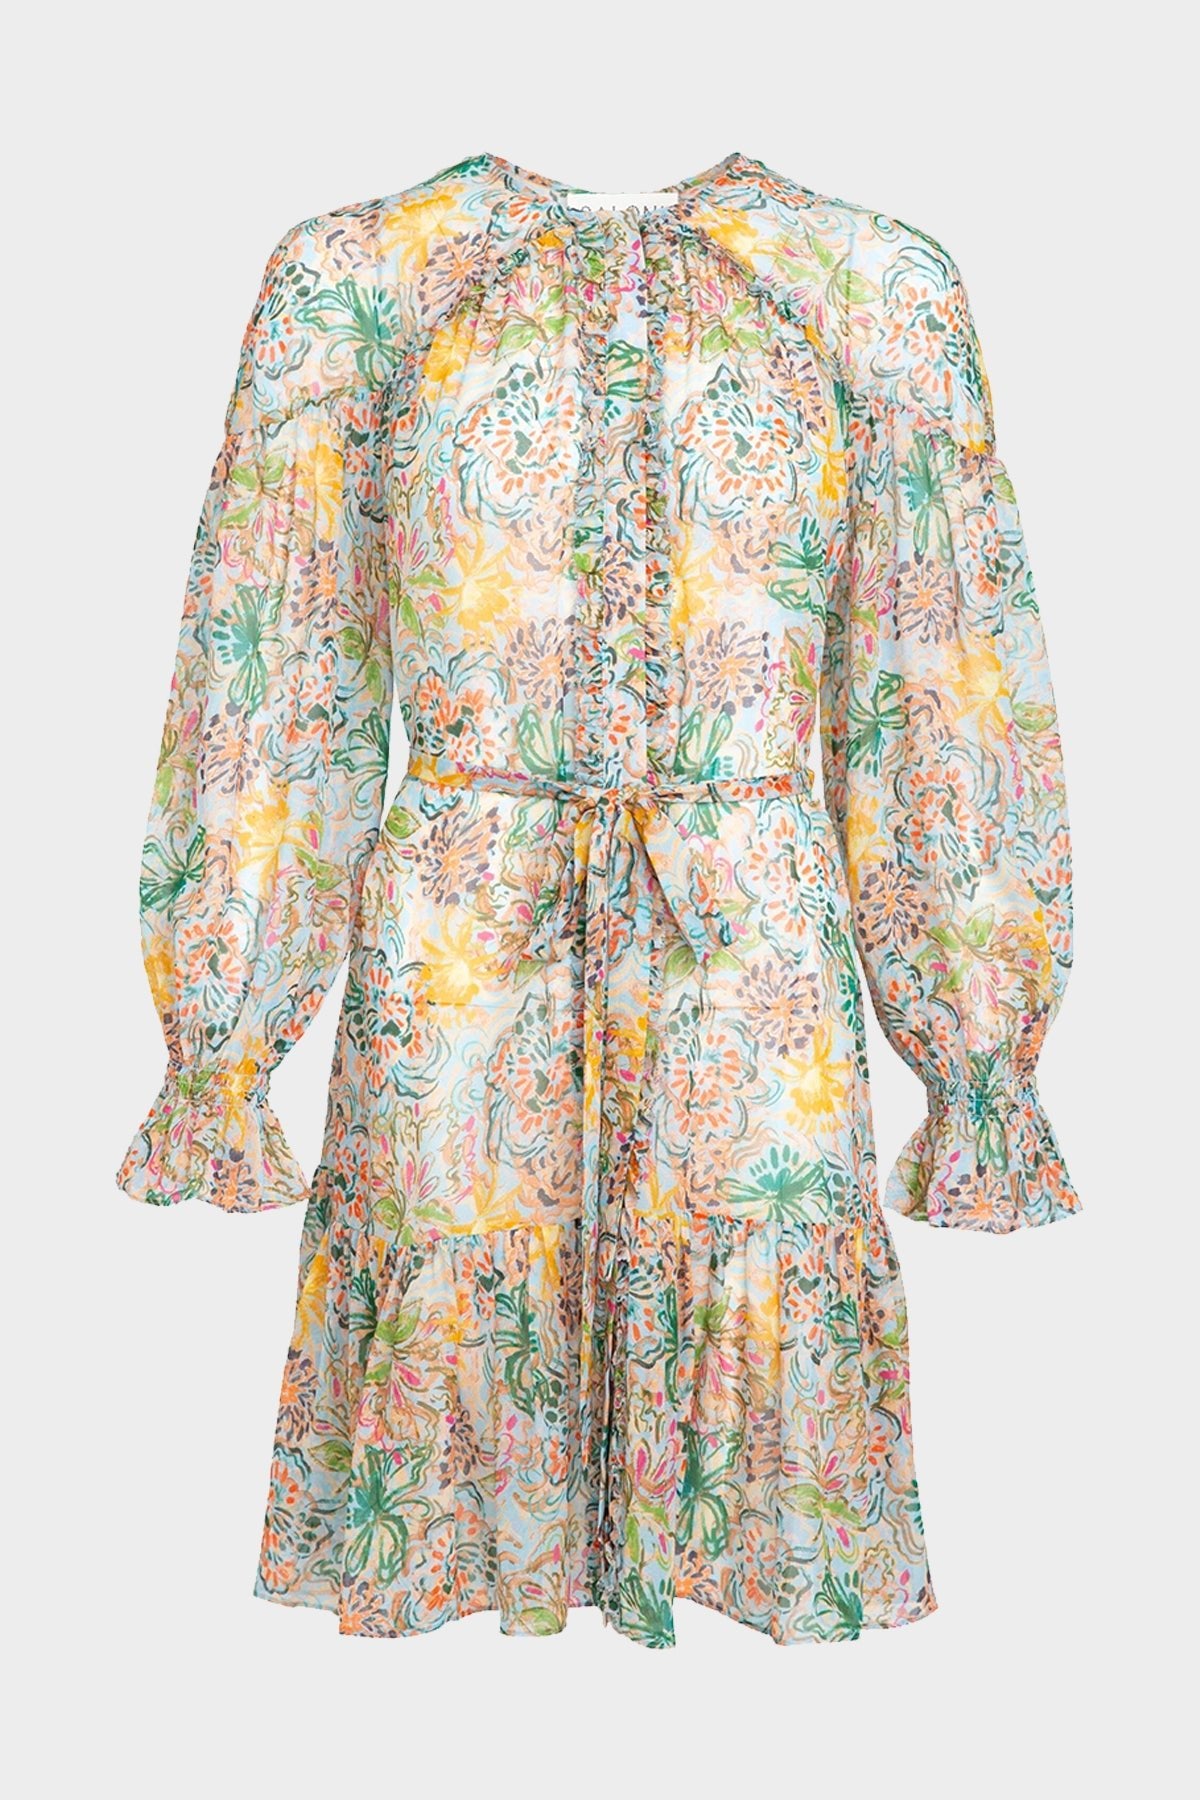 Pixie Dress In Orchard Sky - shop-olivia.com